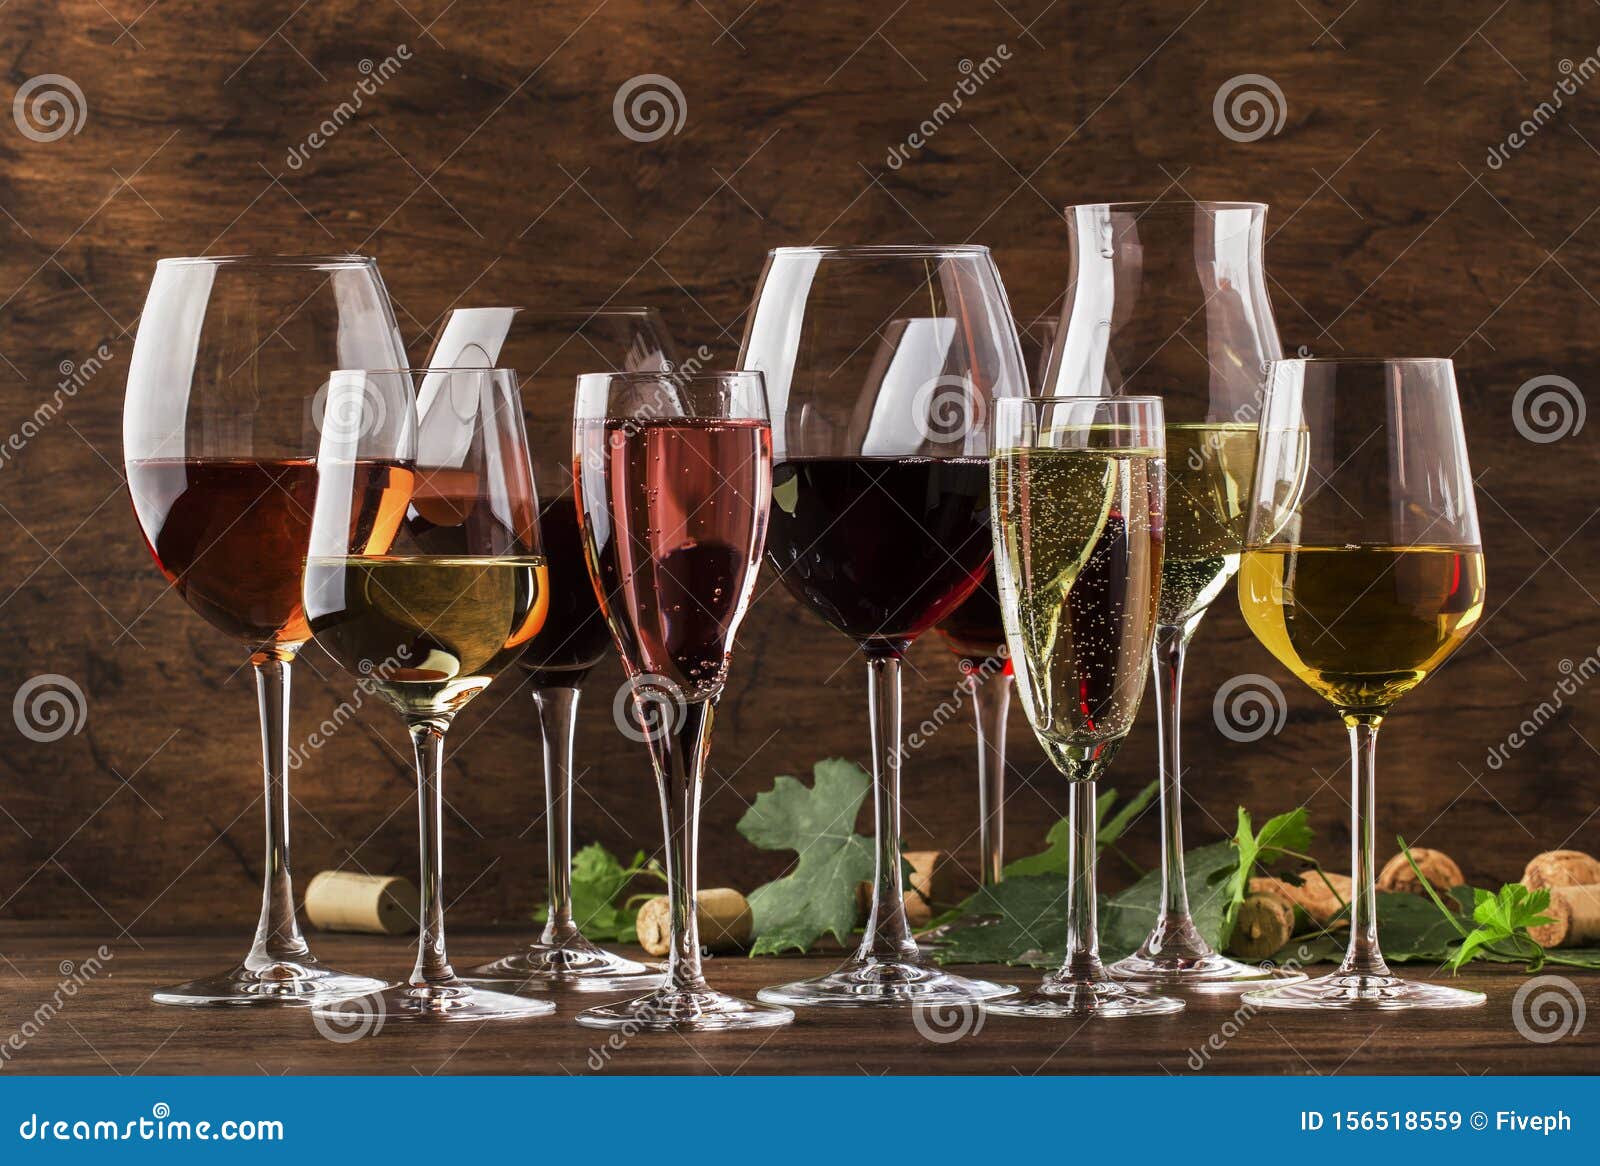 https://thumbs.dreamstime.com/z/wine-tasting-still-sparkling-wines-red-white-rose-champagne-%D1%88%D1%82-assortment-glasses-vintage-wooden-table-background-156518559.jpg